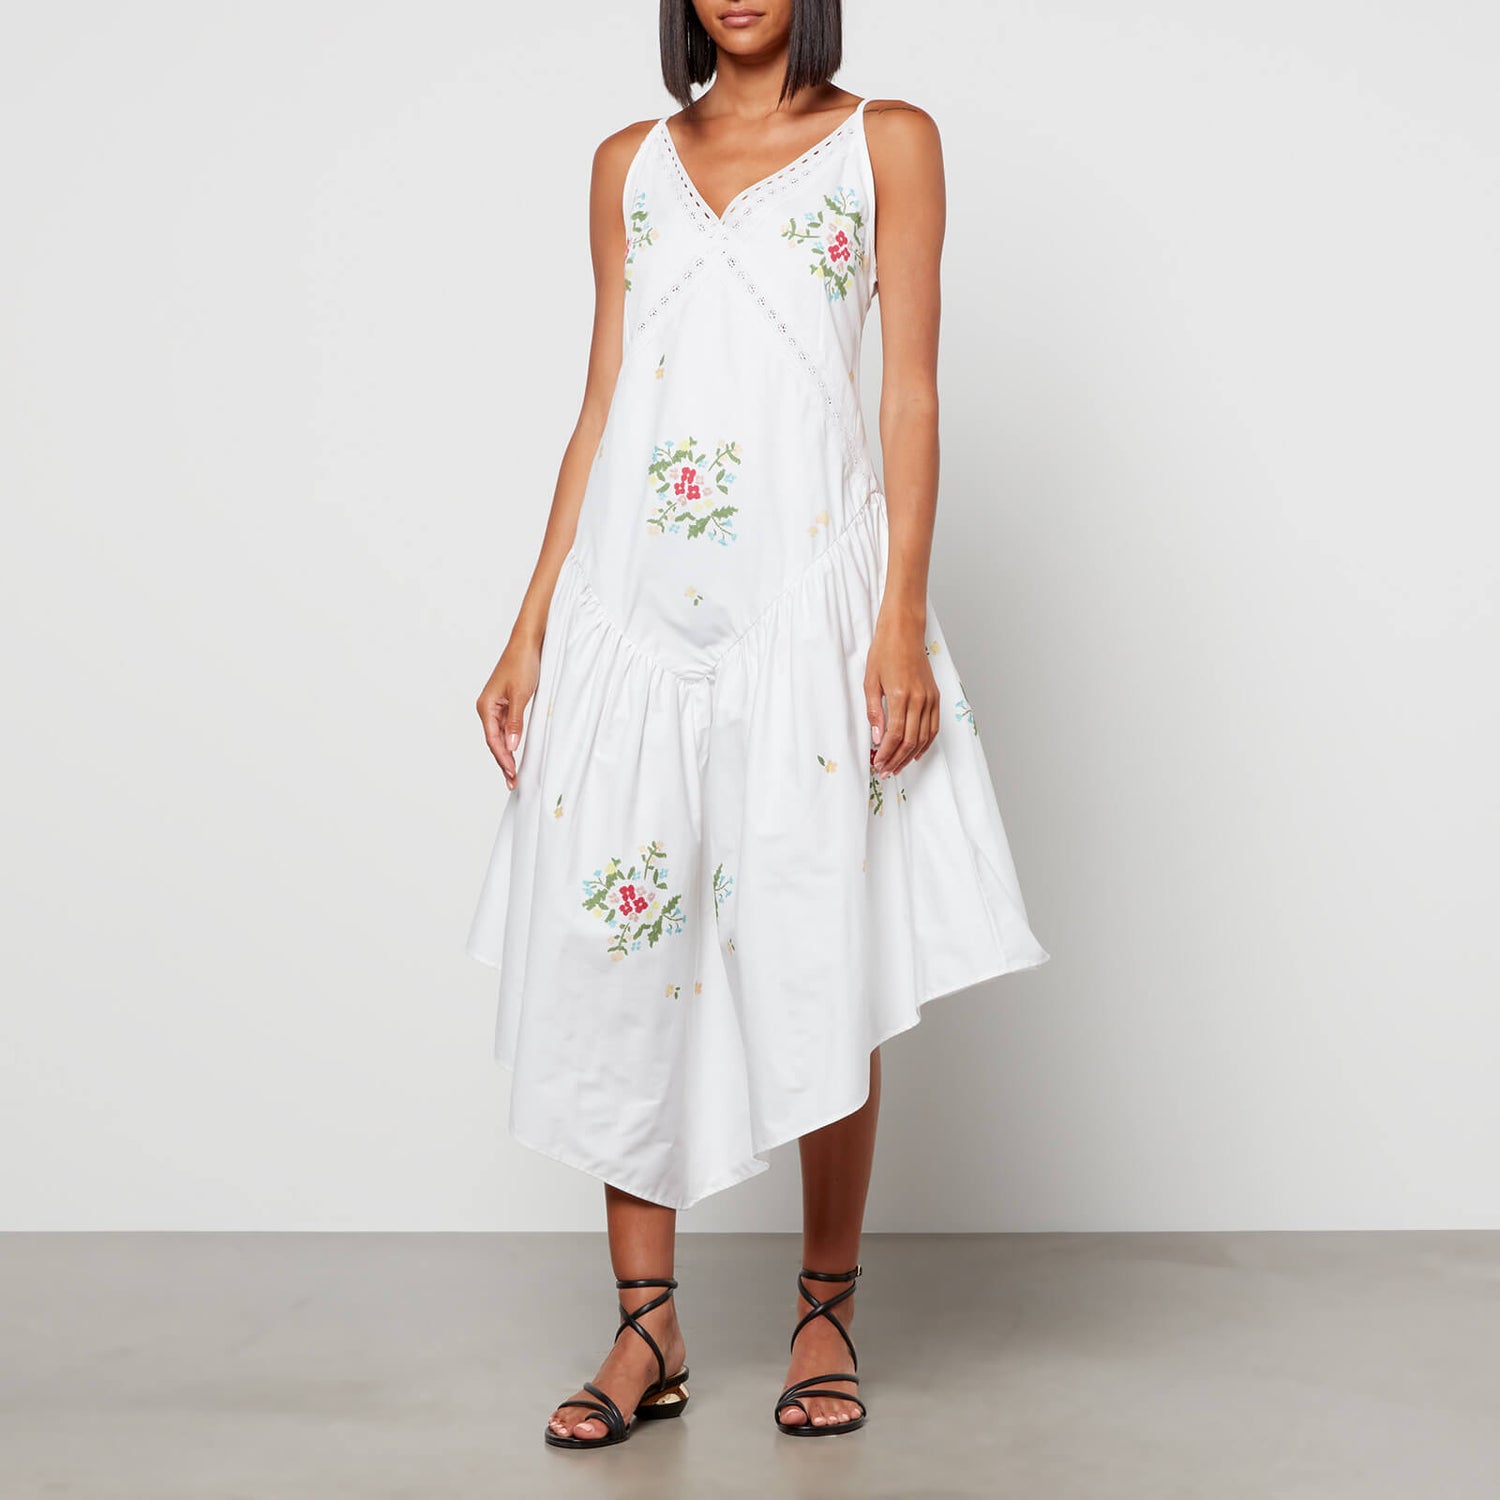 Naya Rea Women's Doris Cotton Lace Dress - White - UK 8